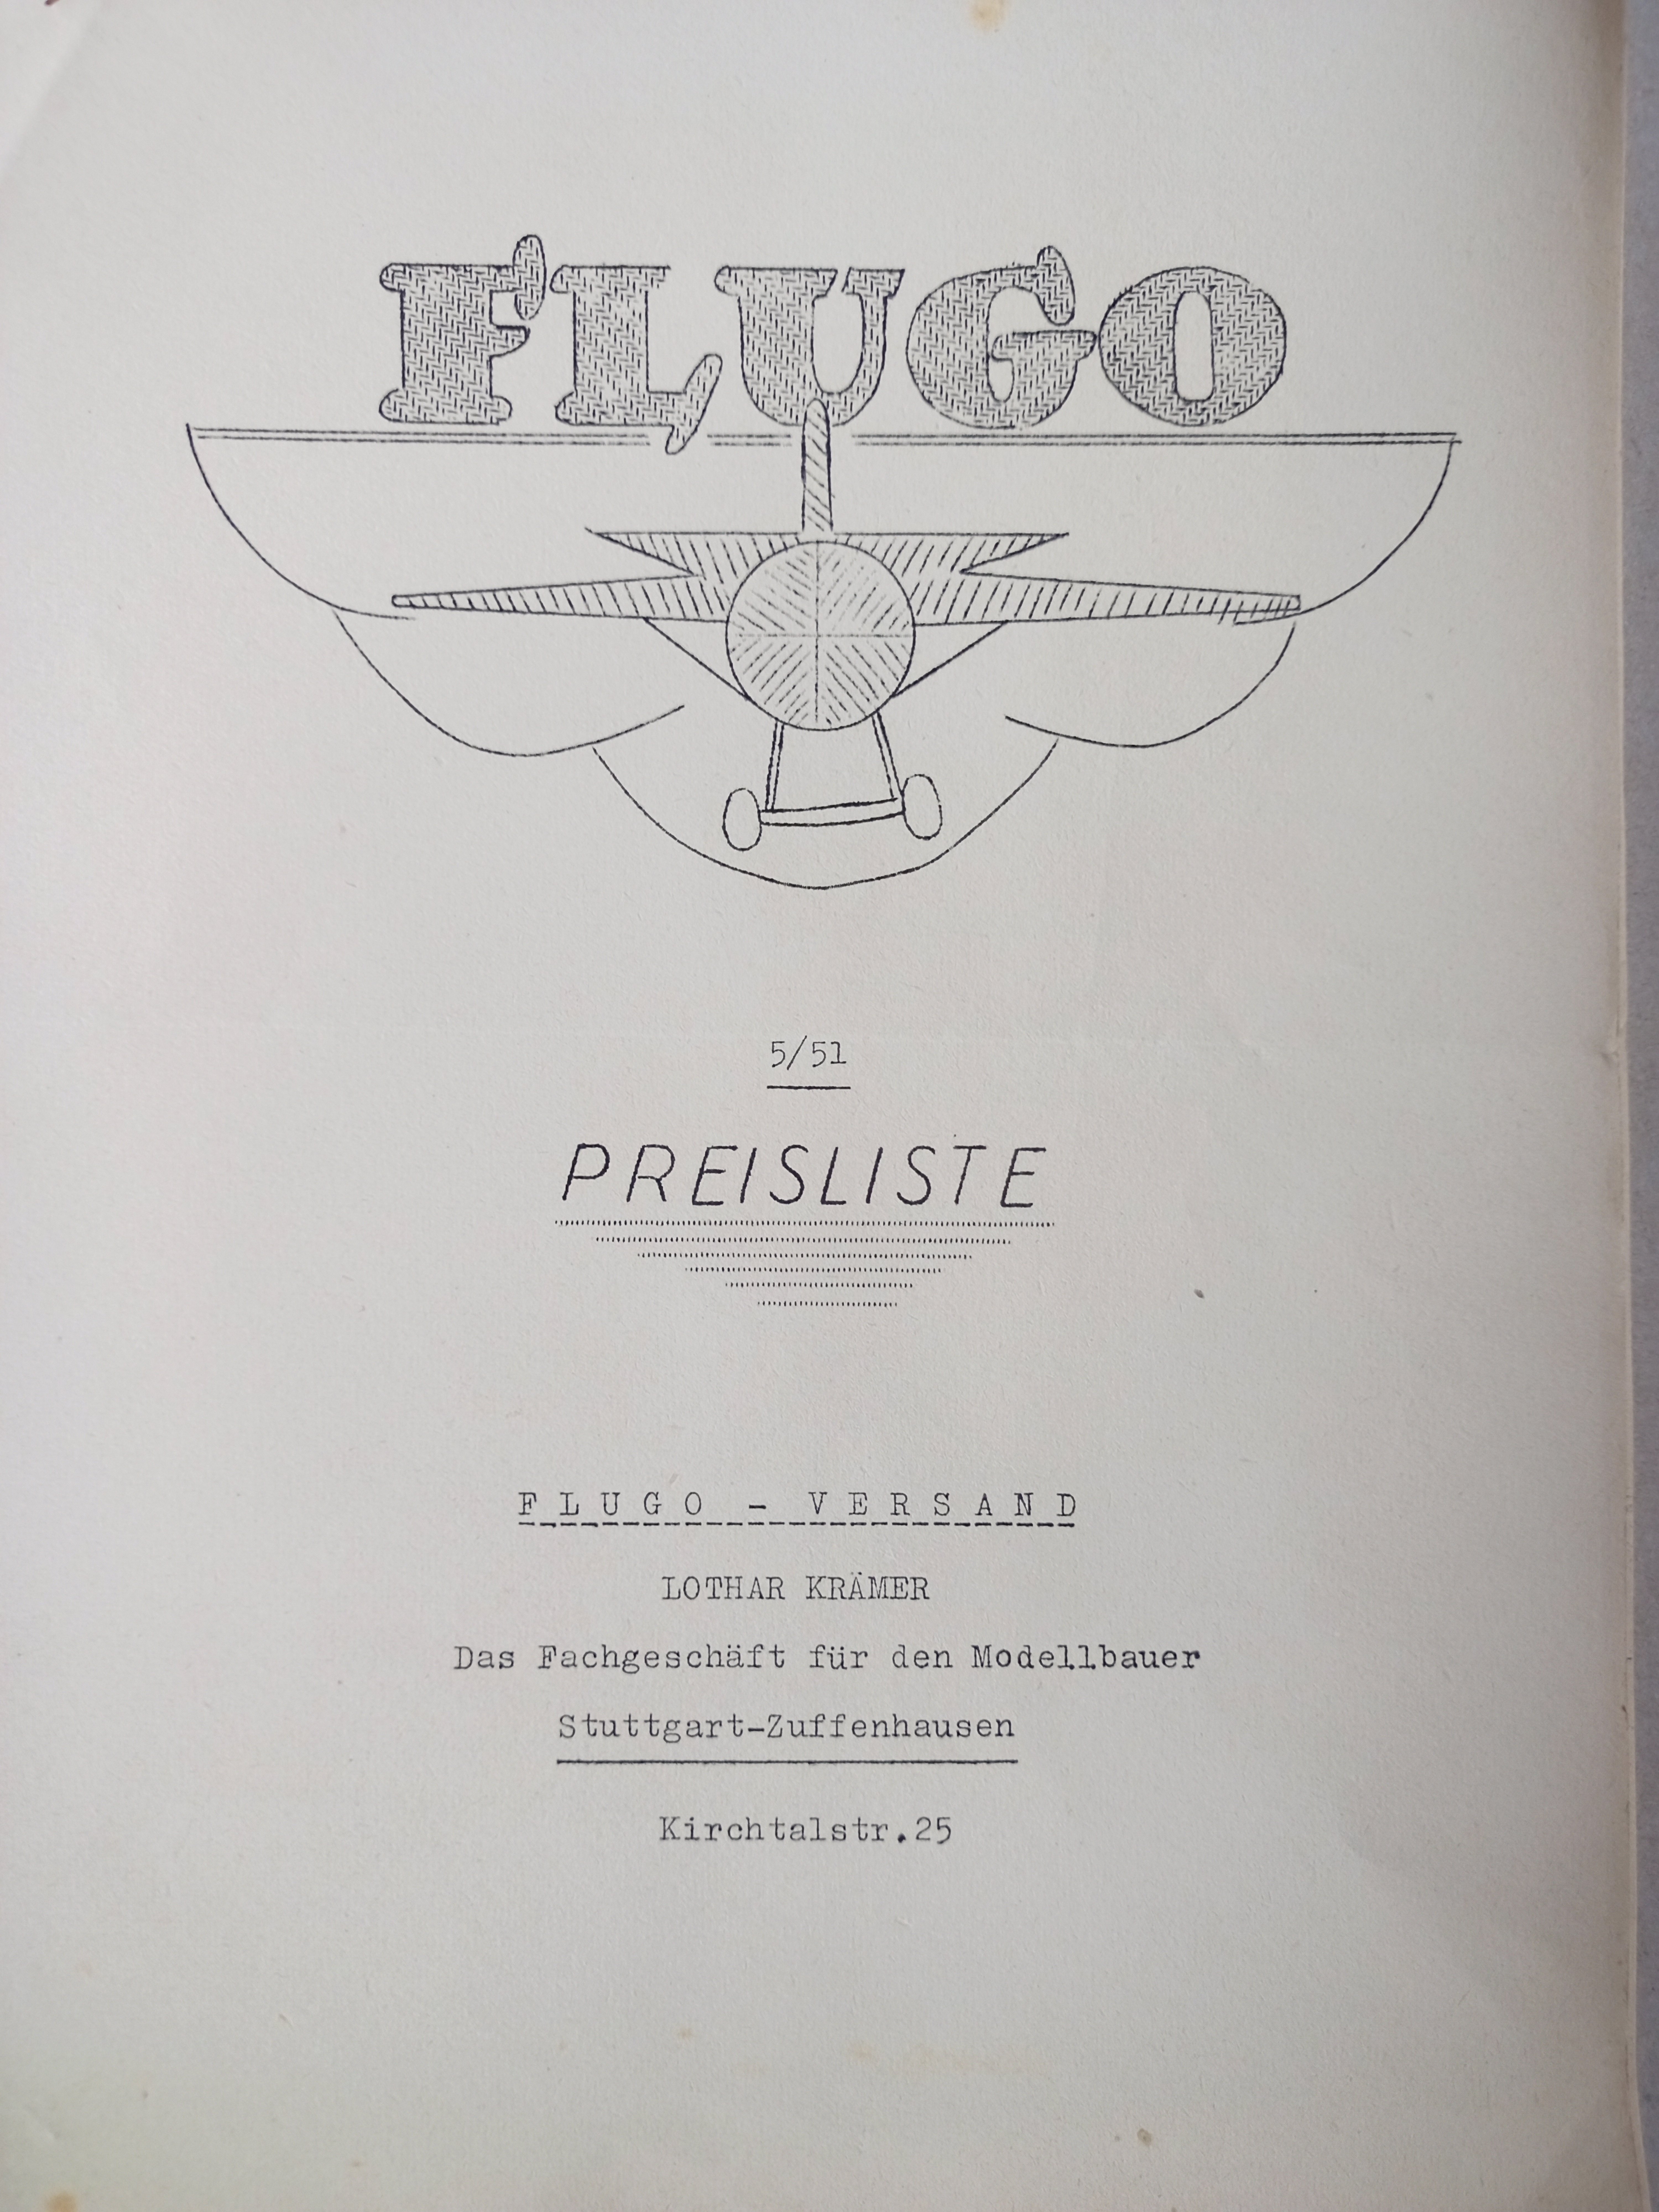 FLUGO Versand Stuttgart (Deutsches Segelflugmuseum mit Modellflug CC BY-NC-SA)